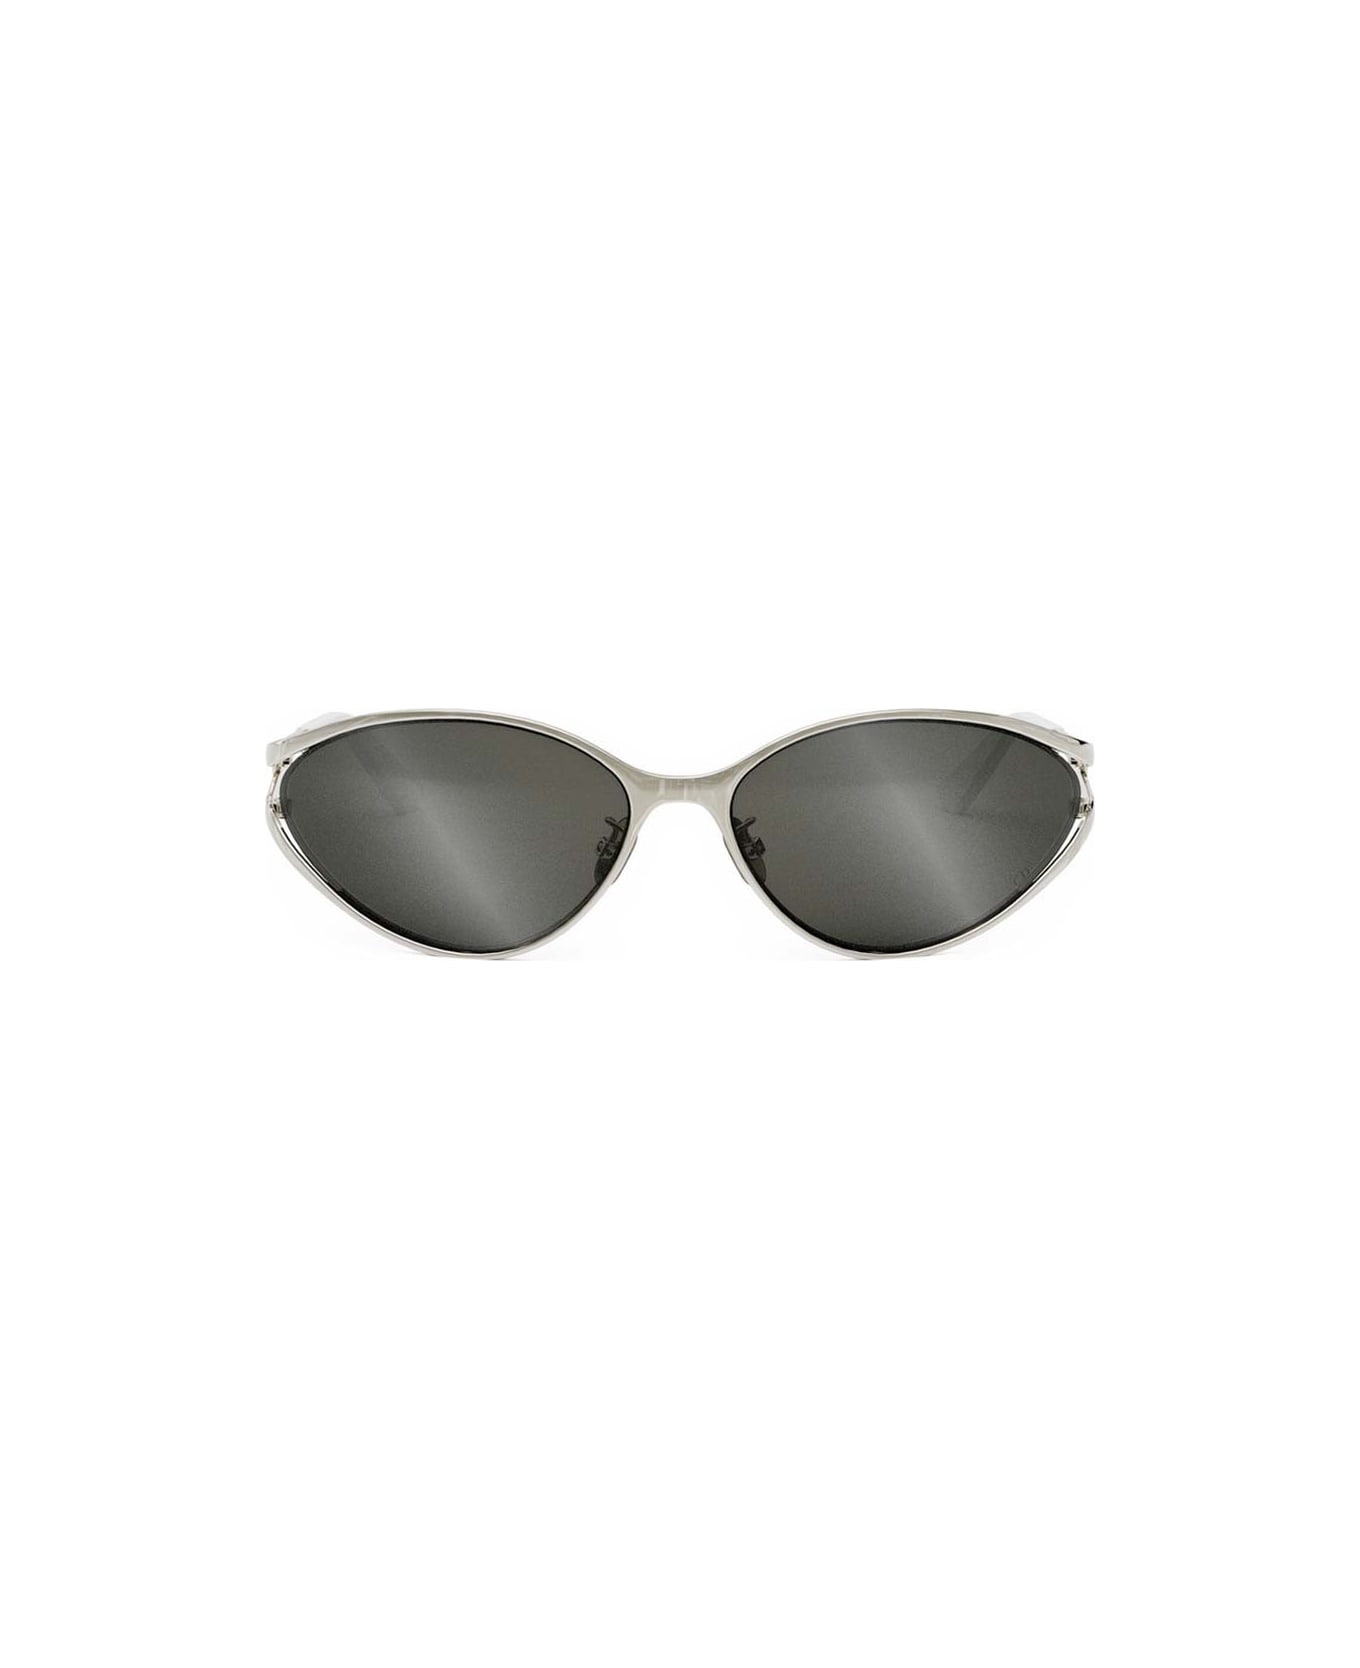 Dior Eyewear Sunglasses - Oro e argento/Silver サングラス